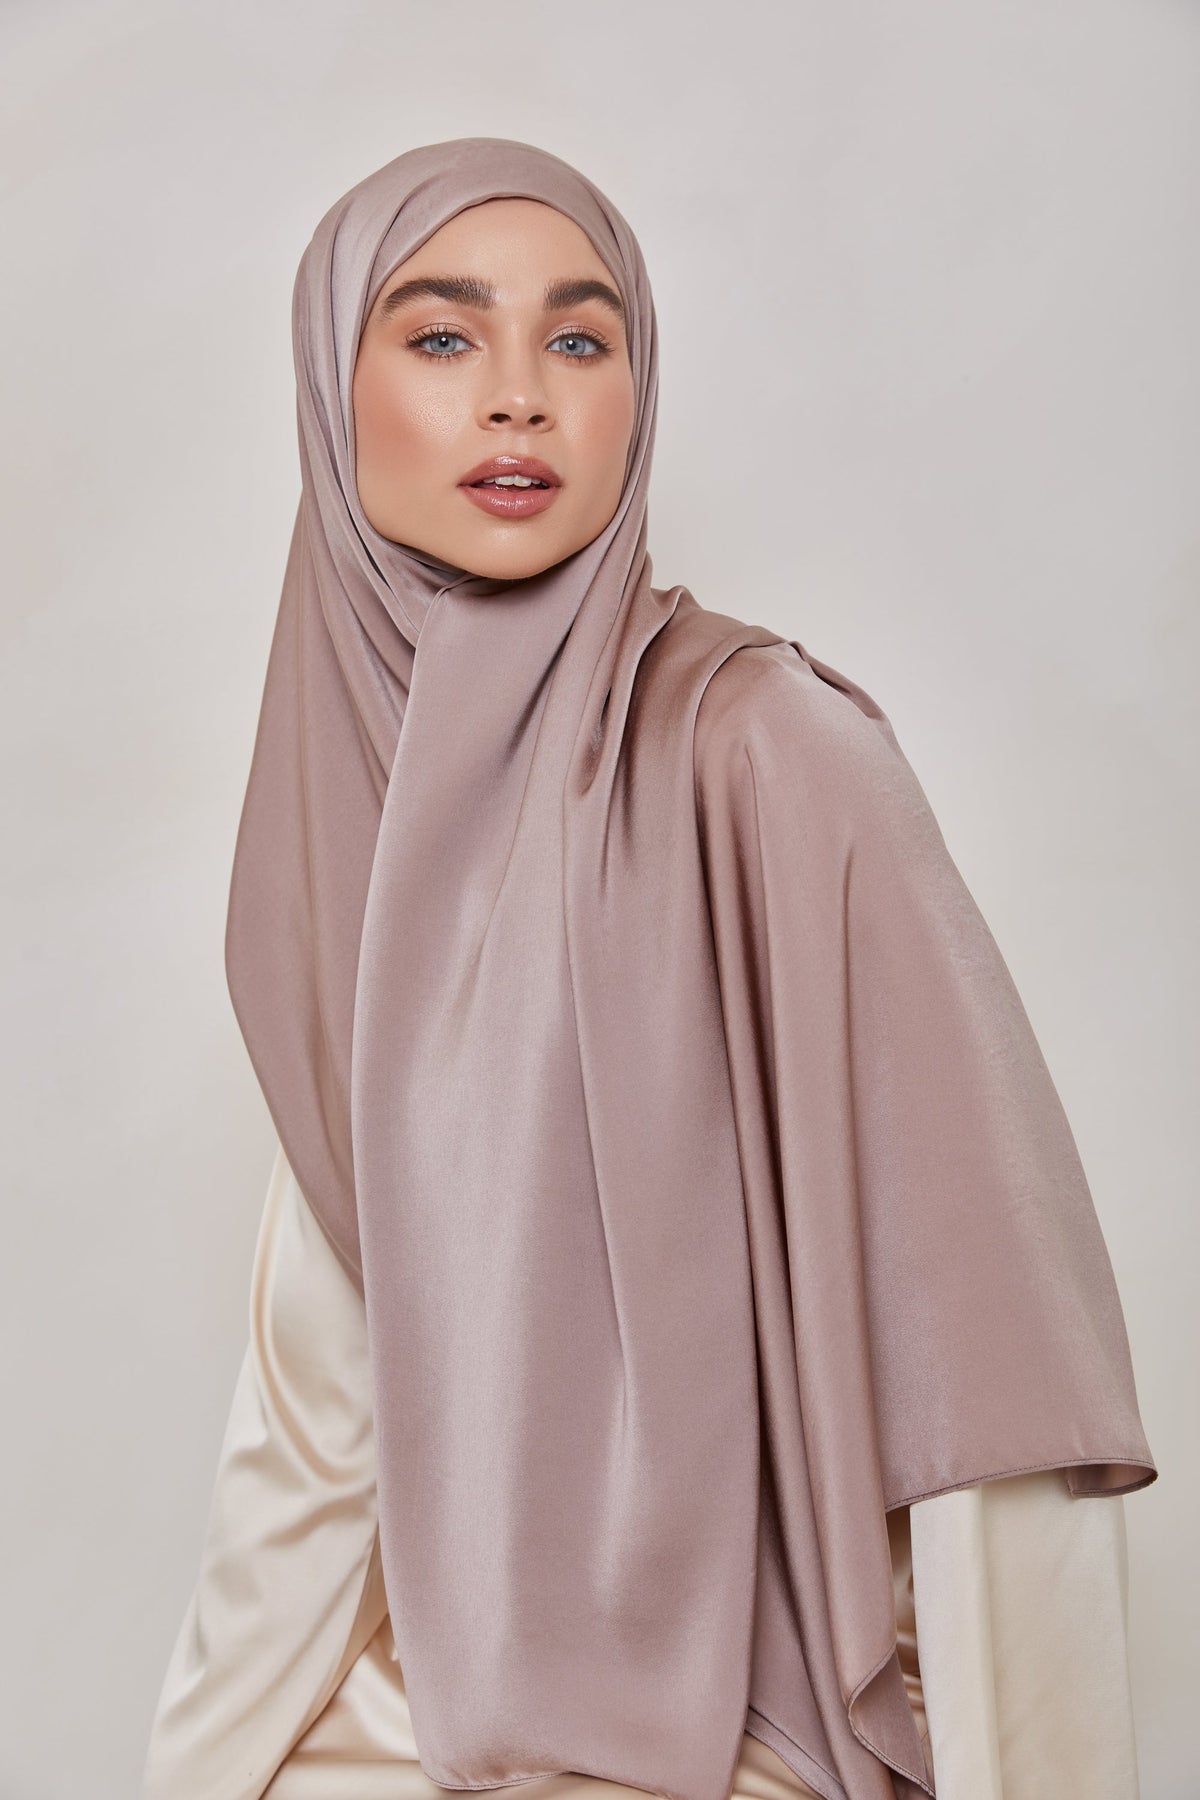 MATTE Satin Hijab - Too Taupe epschoolboard 